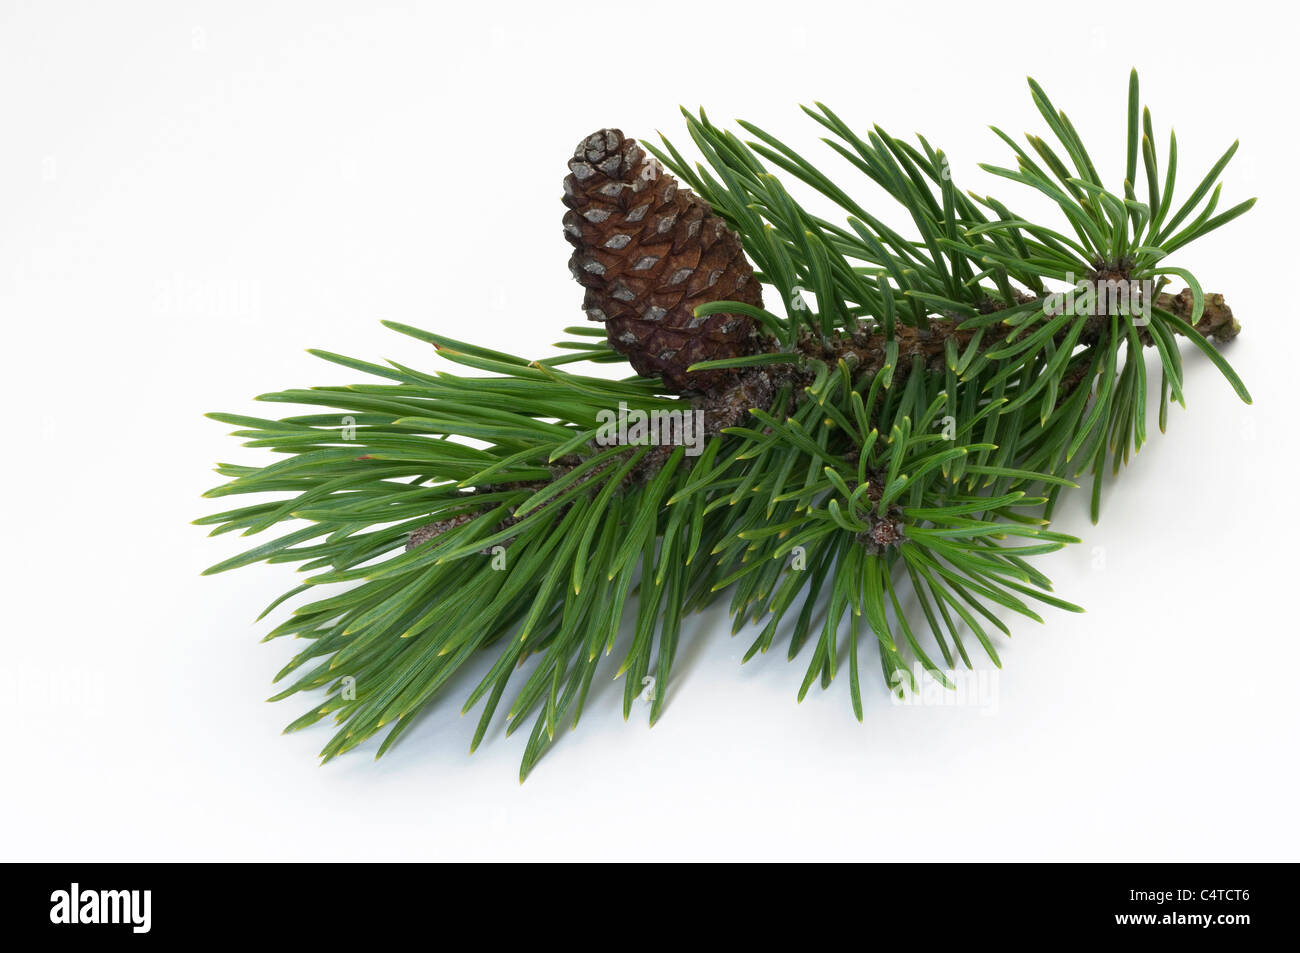 Pin nain, le Dendroctone du pin (Pinus mugo mugo), branche avec les cônes. Studio shot sur un fond blanc. Banque D'Images